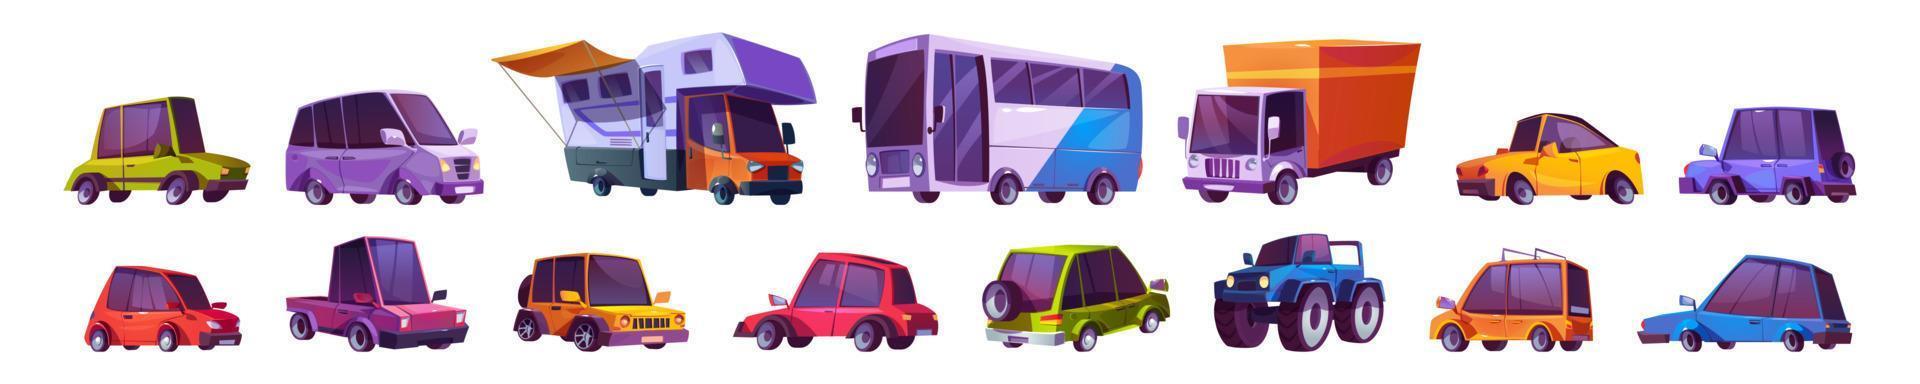 Cartoon cars, automobiles set bus, monster truck vector